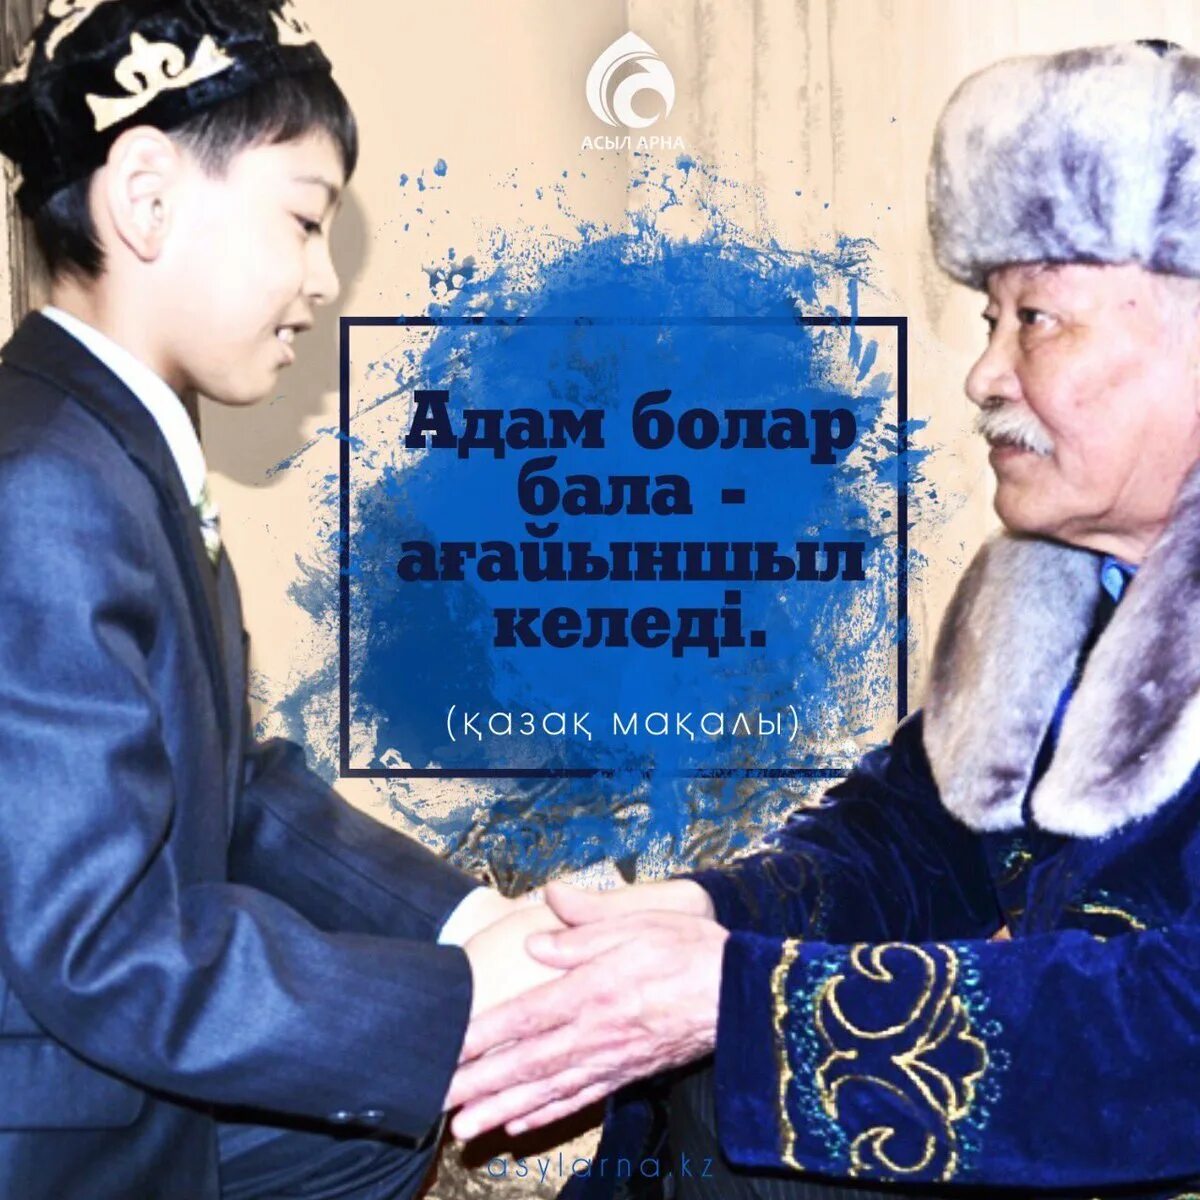 Приветствие казахов. Приветствие на казахском. Праздник здороваться у казахов. 14 наурыз көрісу күні сценарий